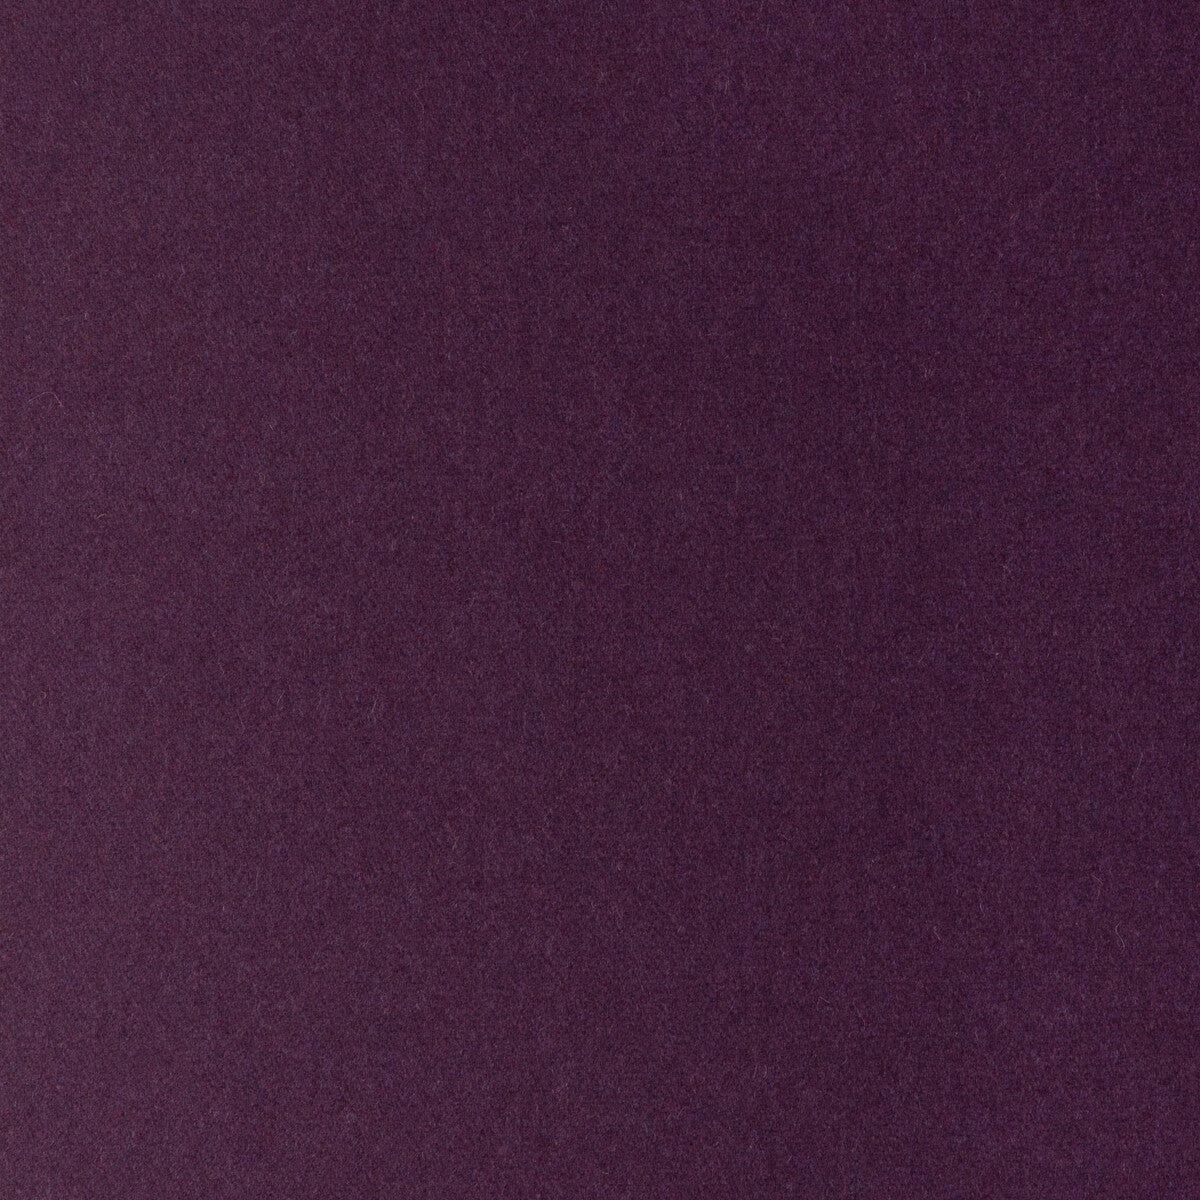 Jefferson Wool fabric in blackberry color - pattern 34397.10.0 - by Kravet Contract